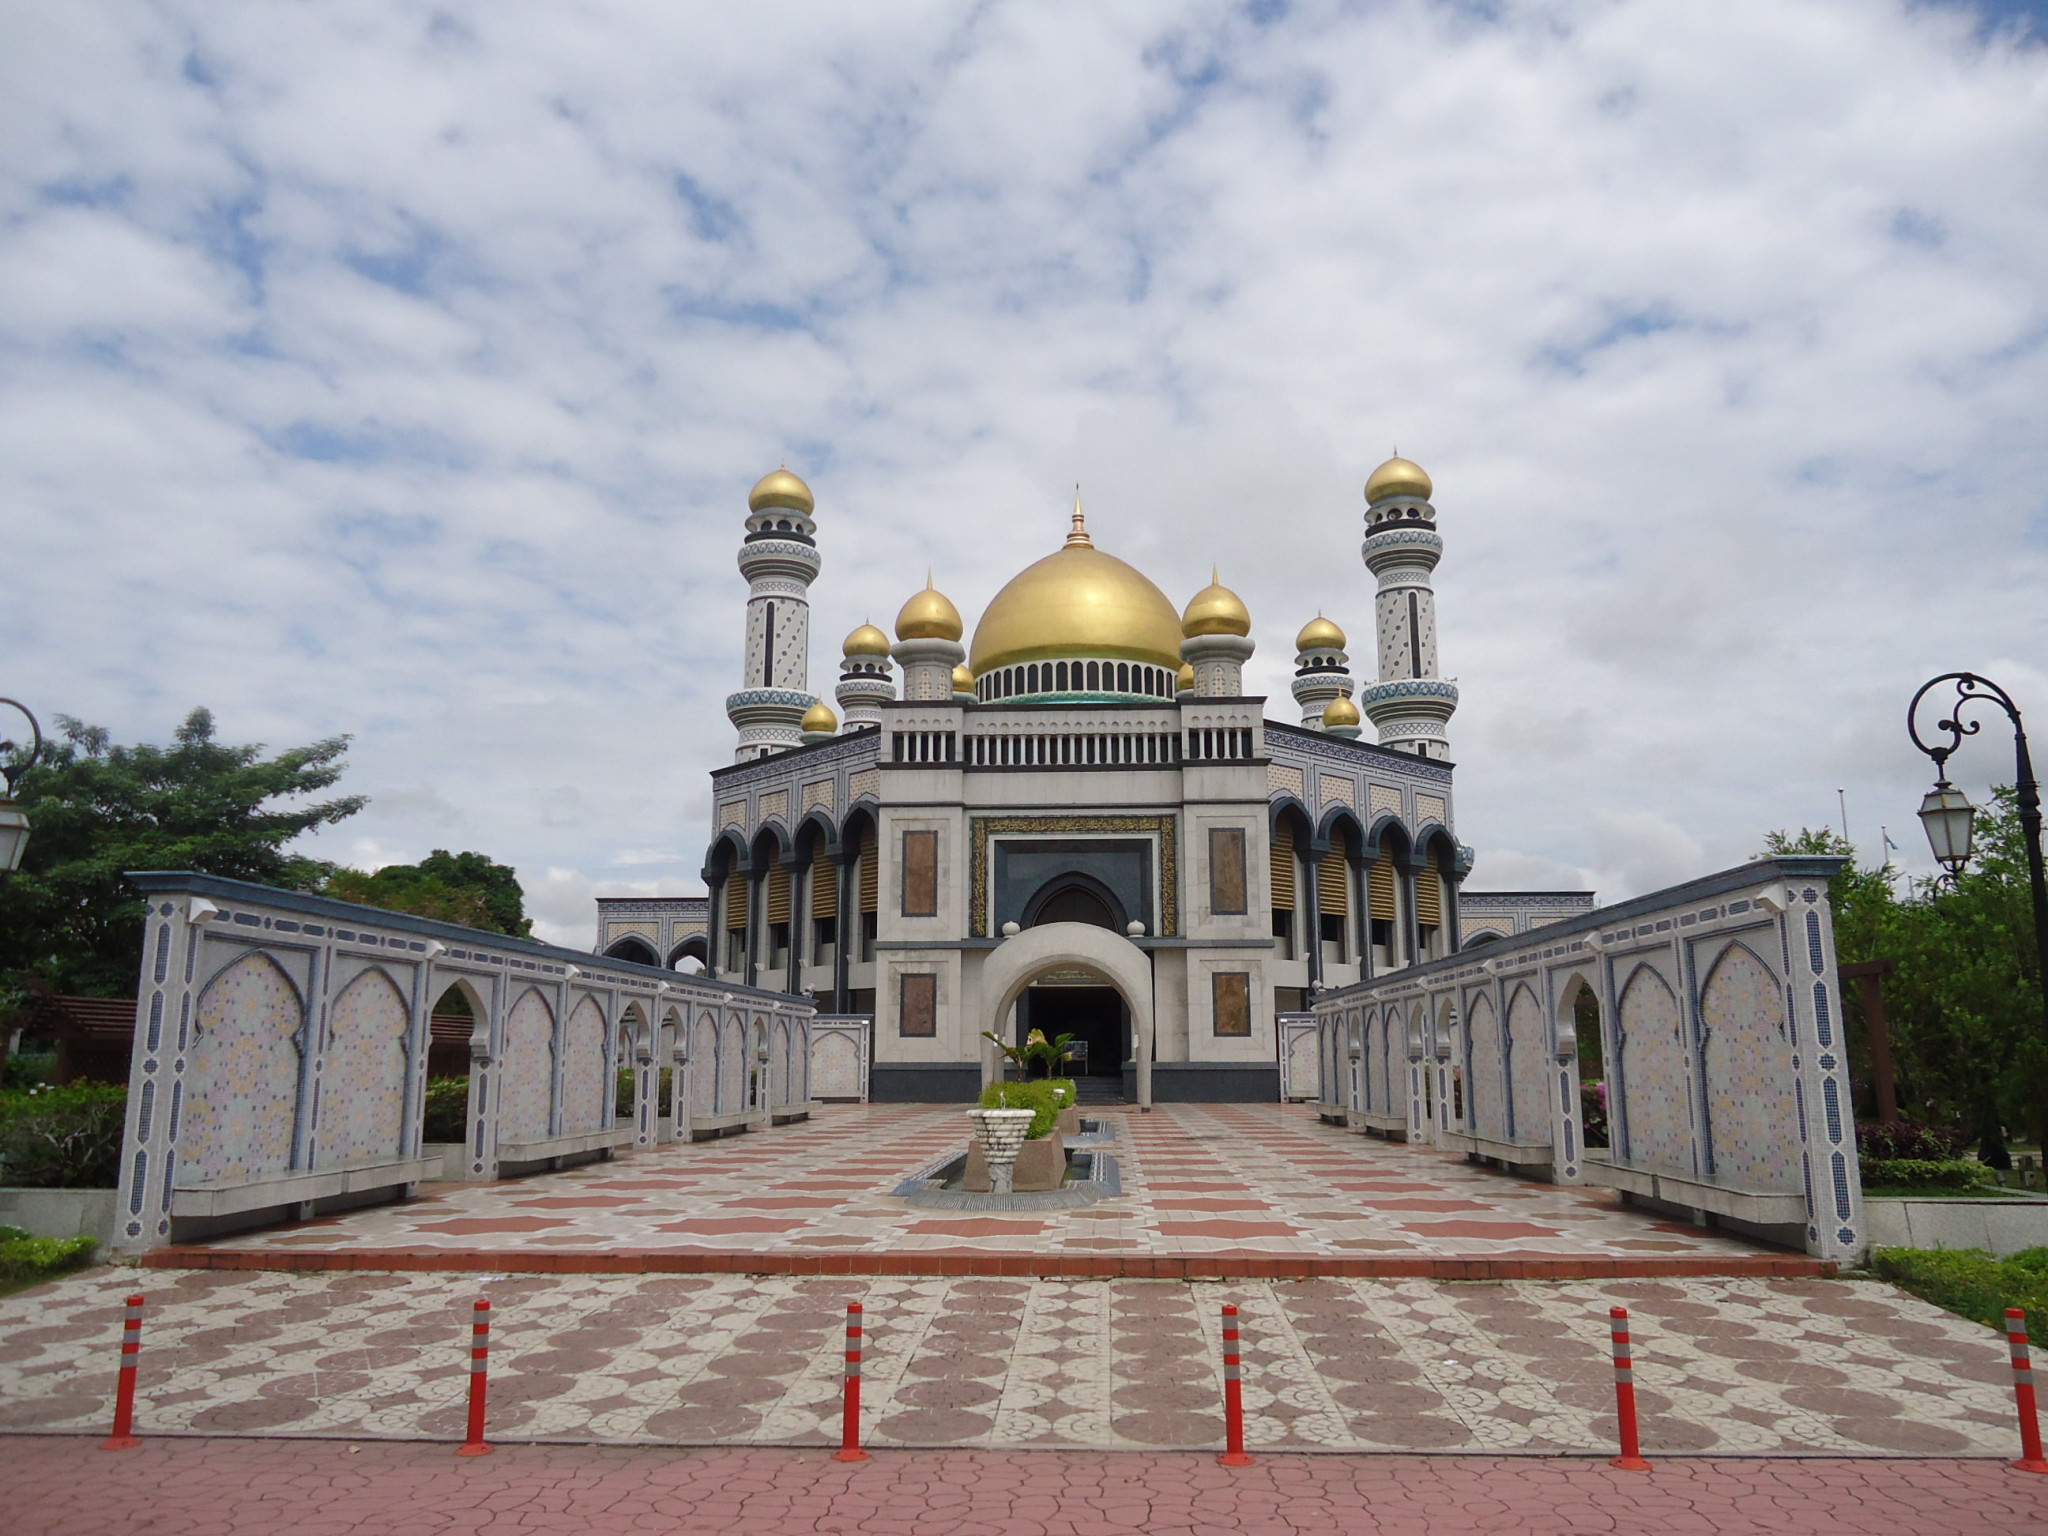 Biggest mosque in Brunei Jame Asr Hassanil Bolkiah